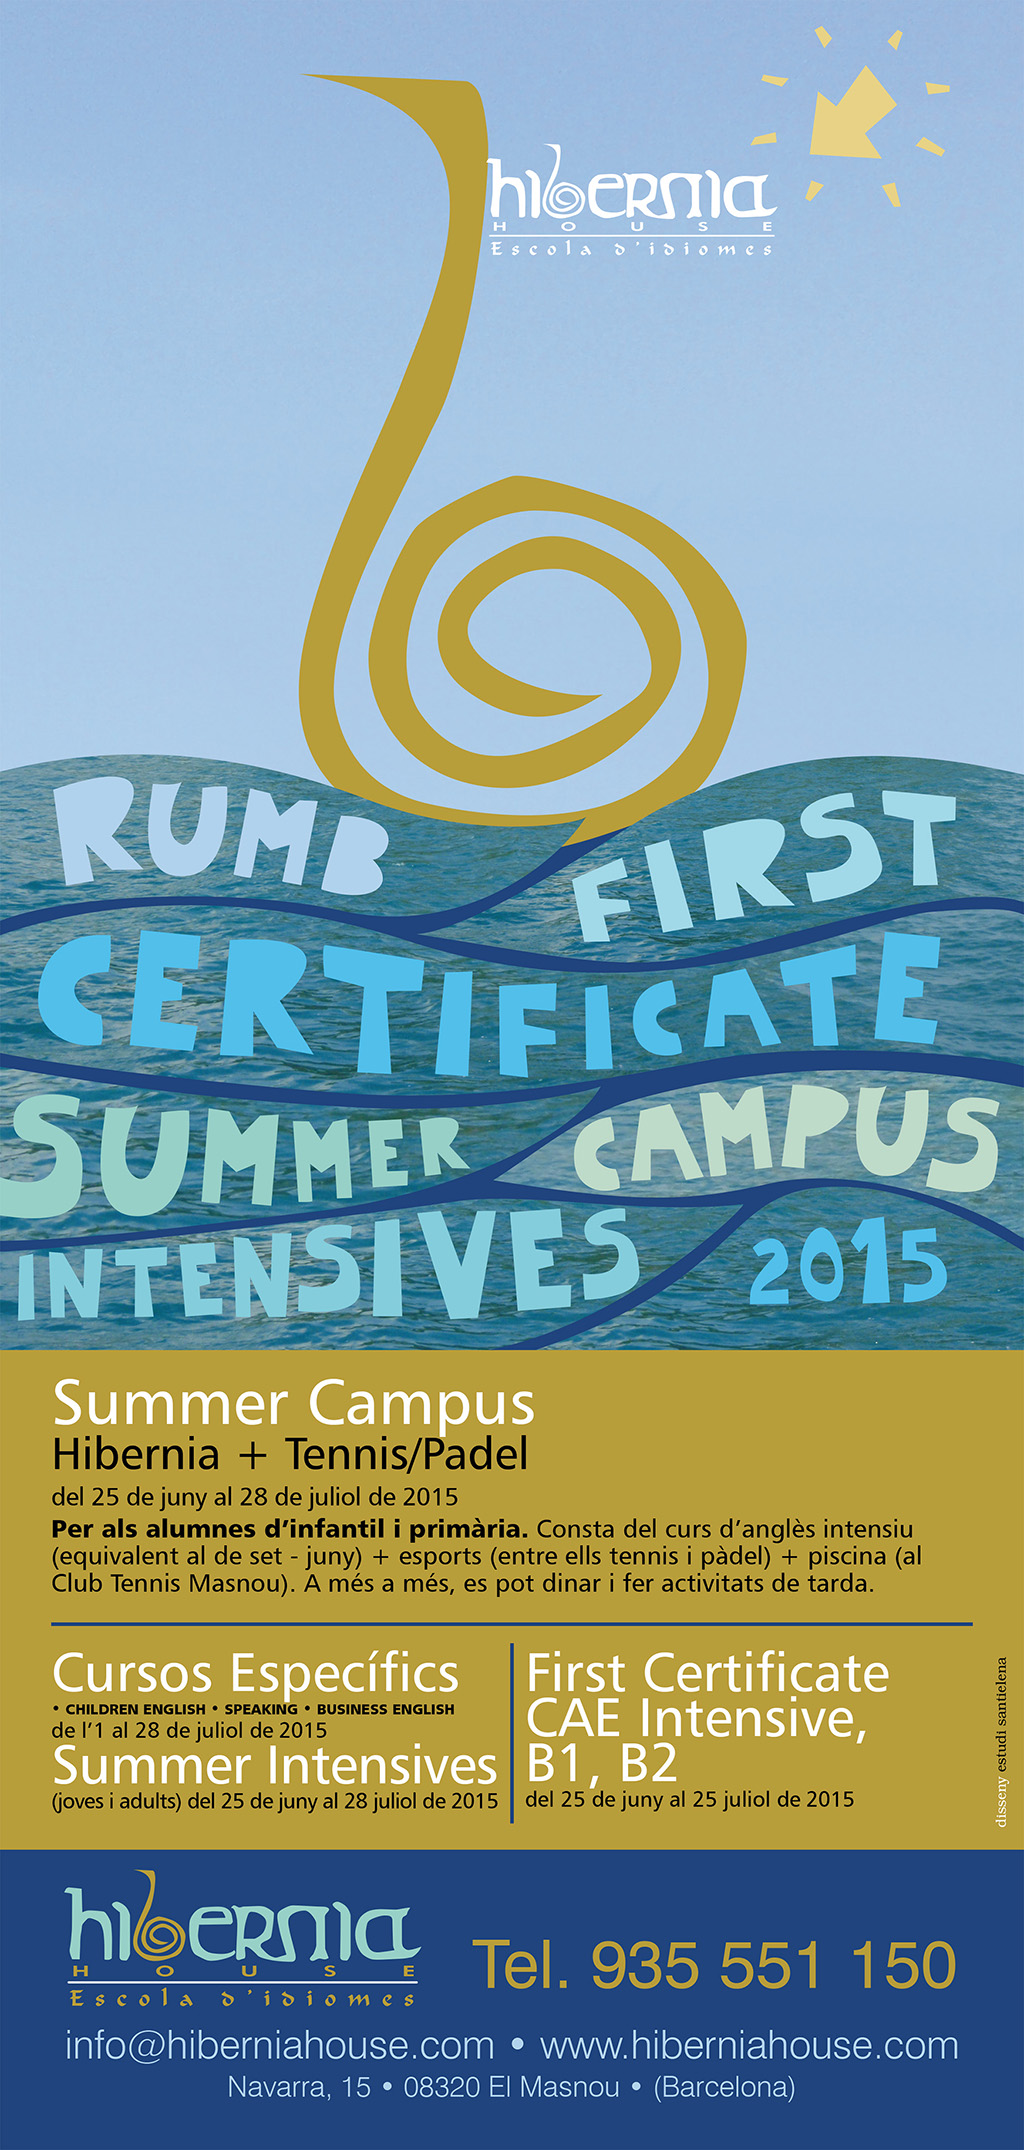 Summer Campus Hibernia House